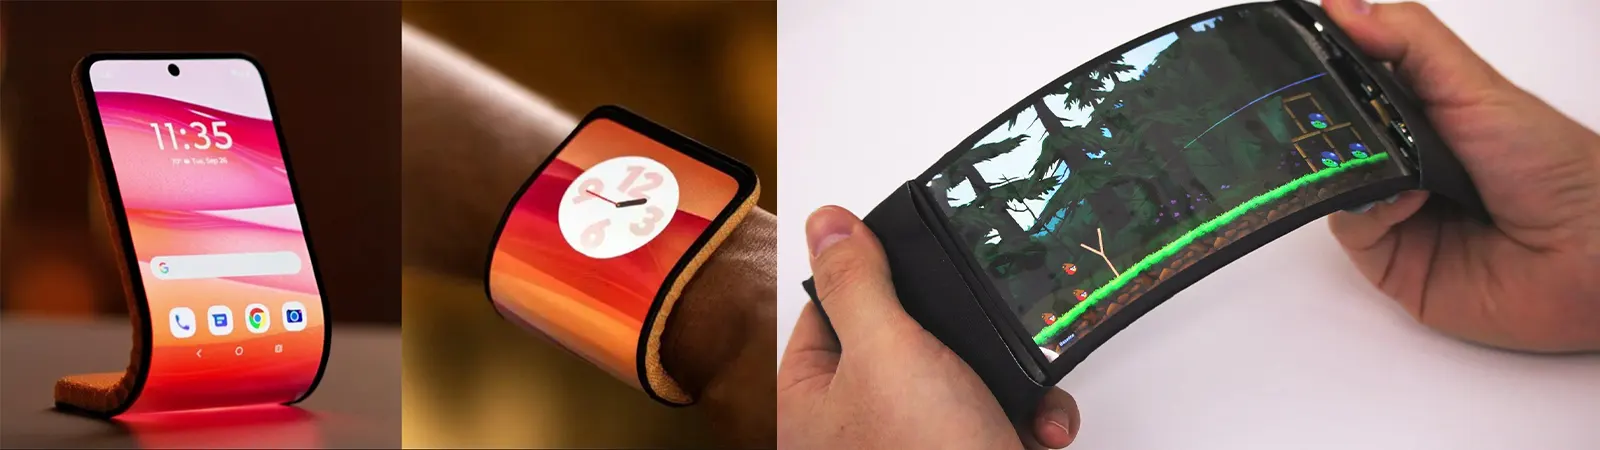 Bendable Phone Update : Smartwatch की जगह अब कलाई पर होगा Smartphone!!! Motorola के पेश किया जबरदस्त Bendable Phone